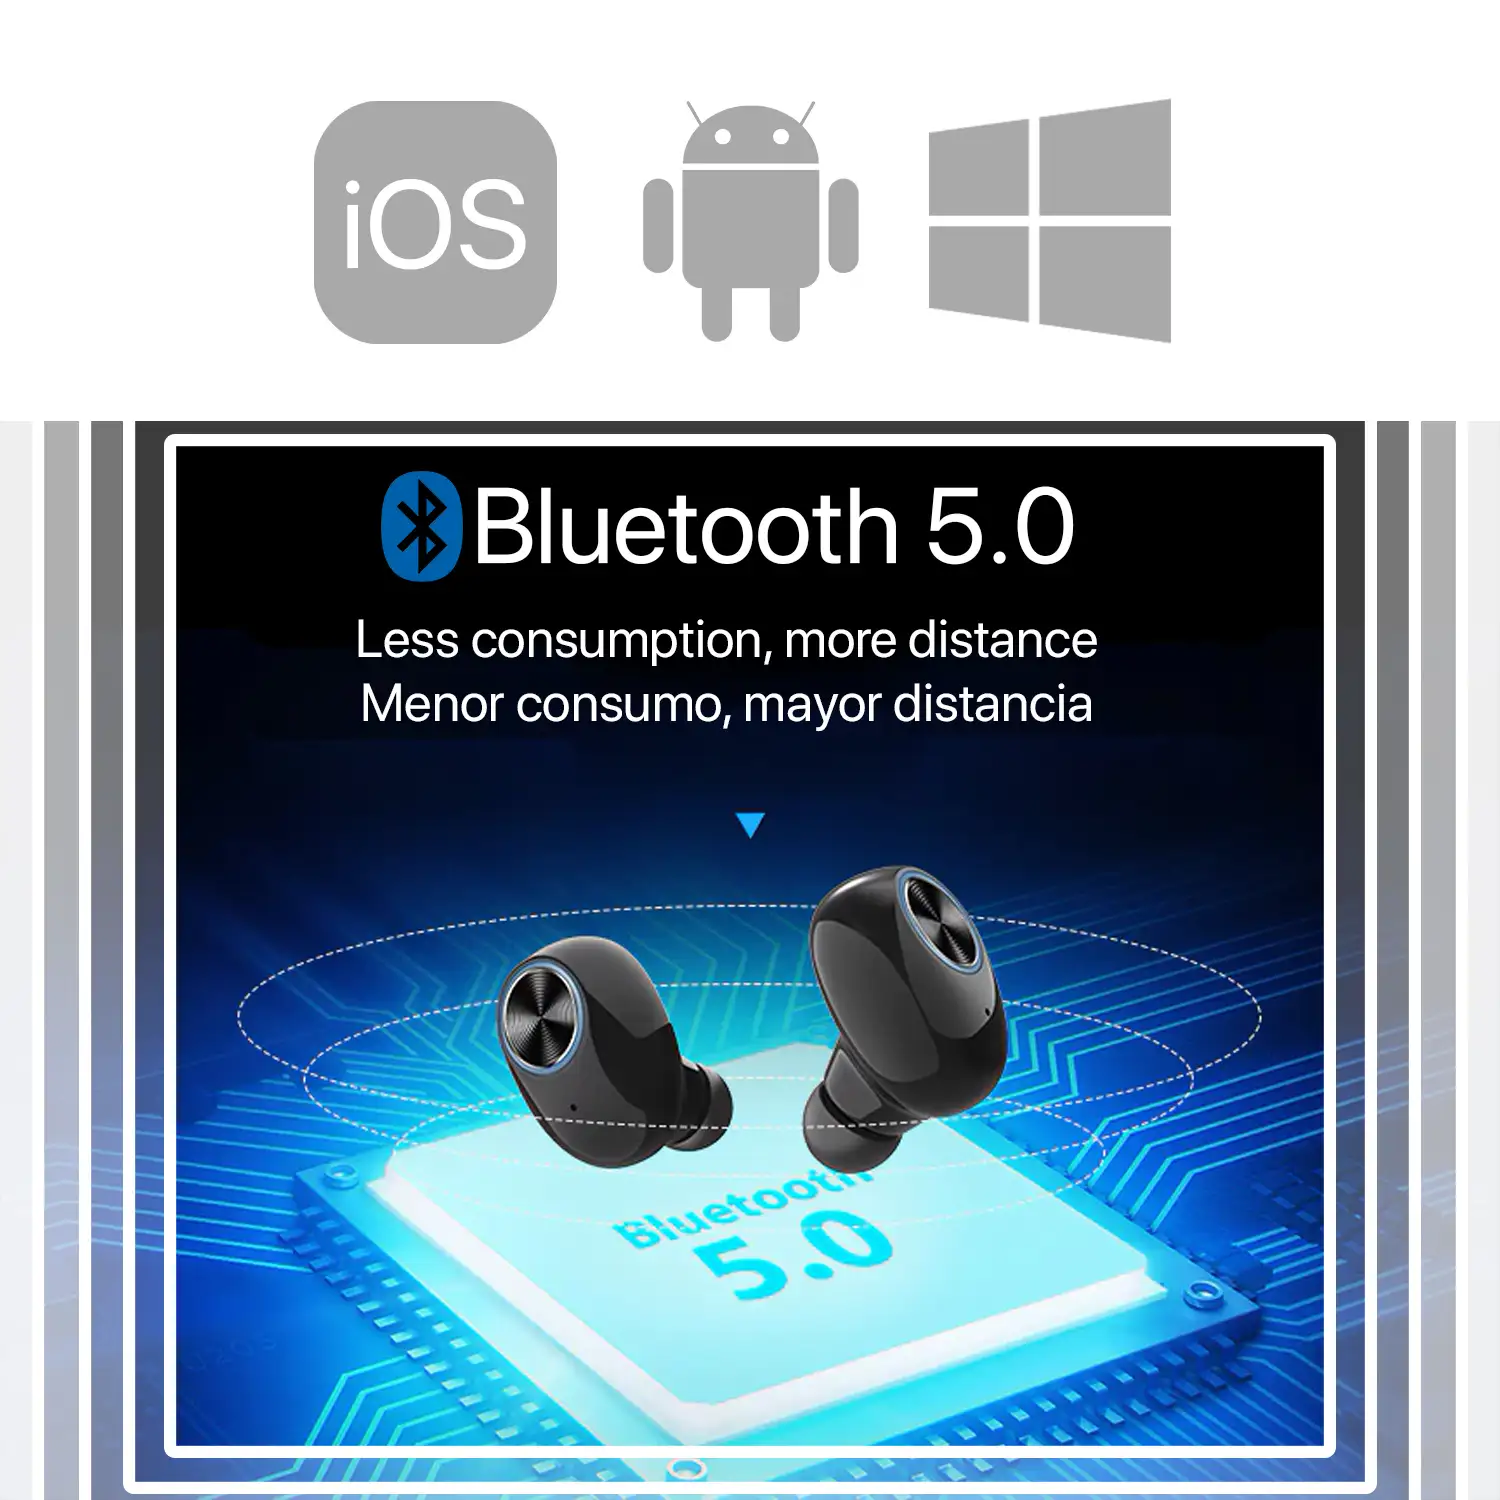 Auriculares DAM V6 TWS Bluetooth 5.0 con base de carga Powerbank y sincronización automática